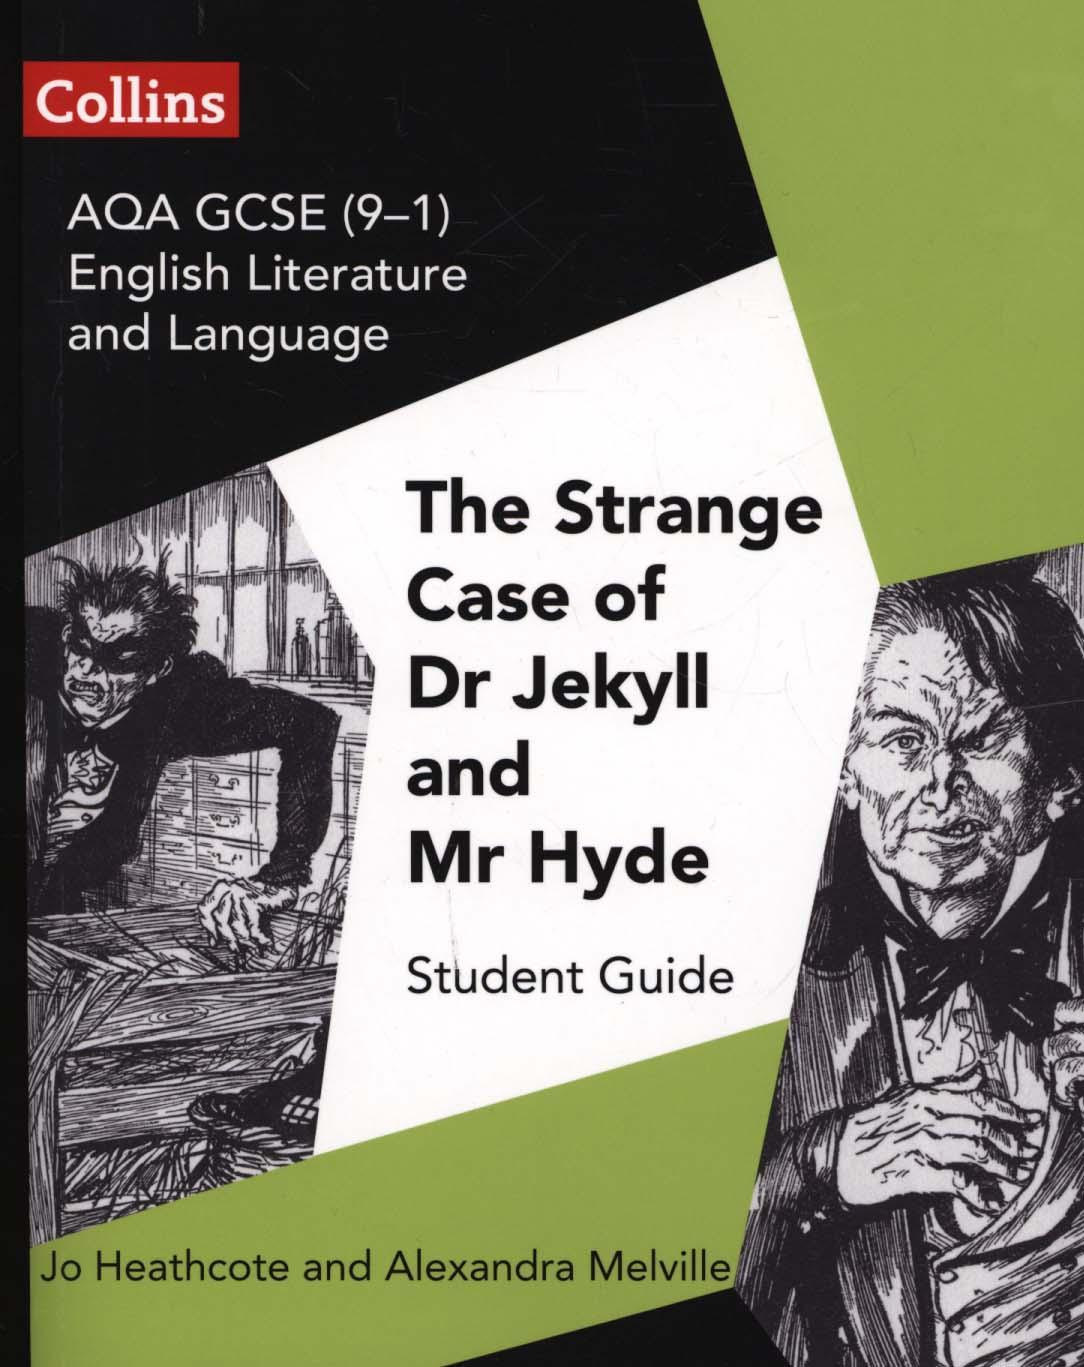 AQA GCSE (9-1) English Literature and Language - Dr Jekyll a